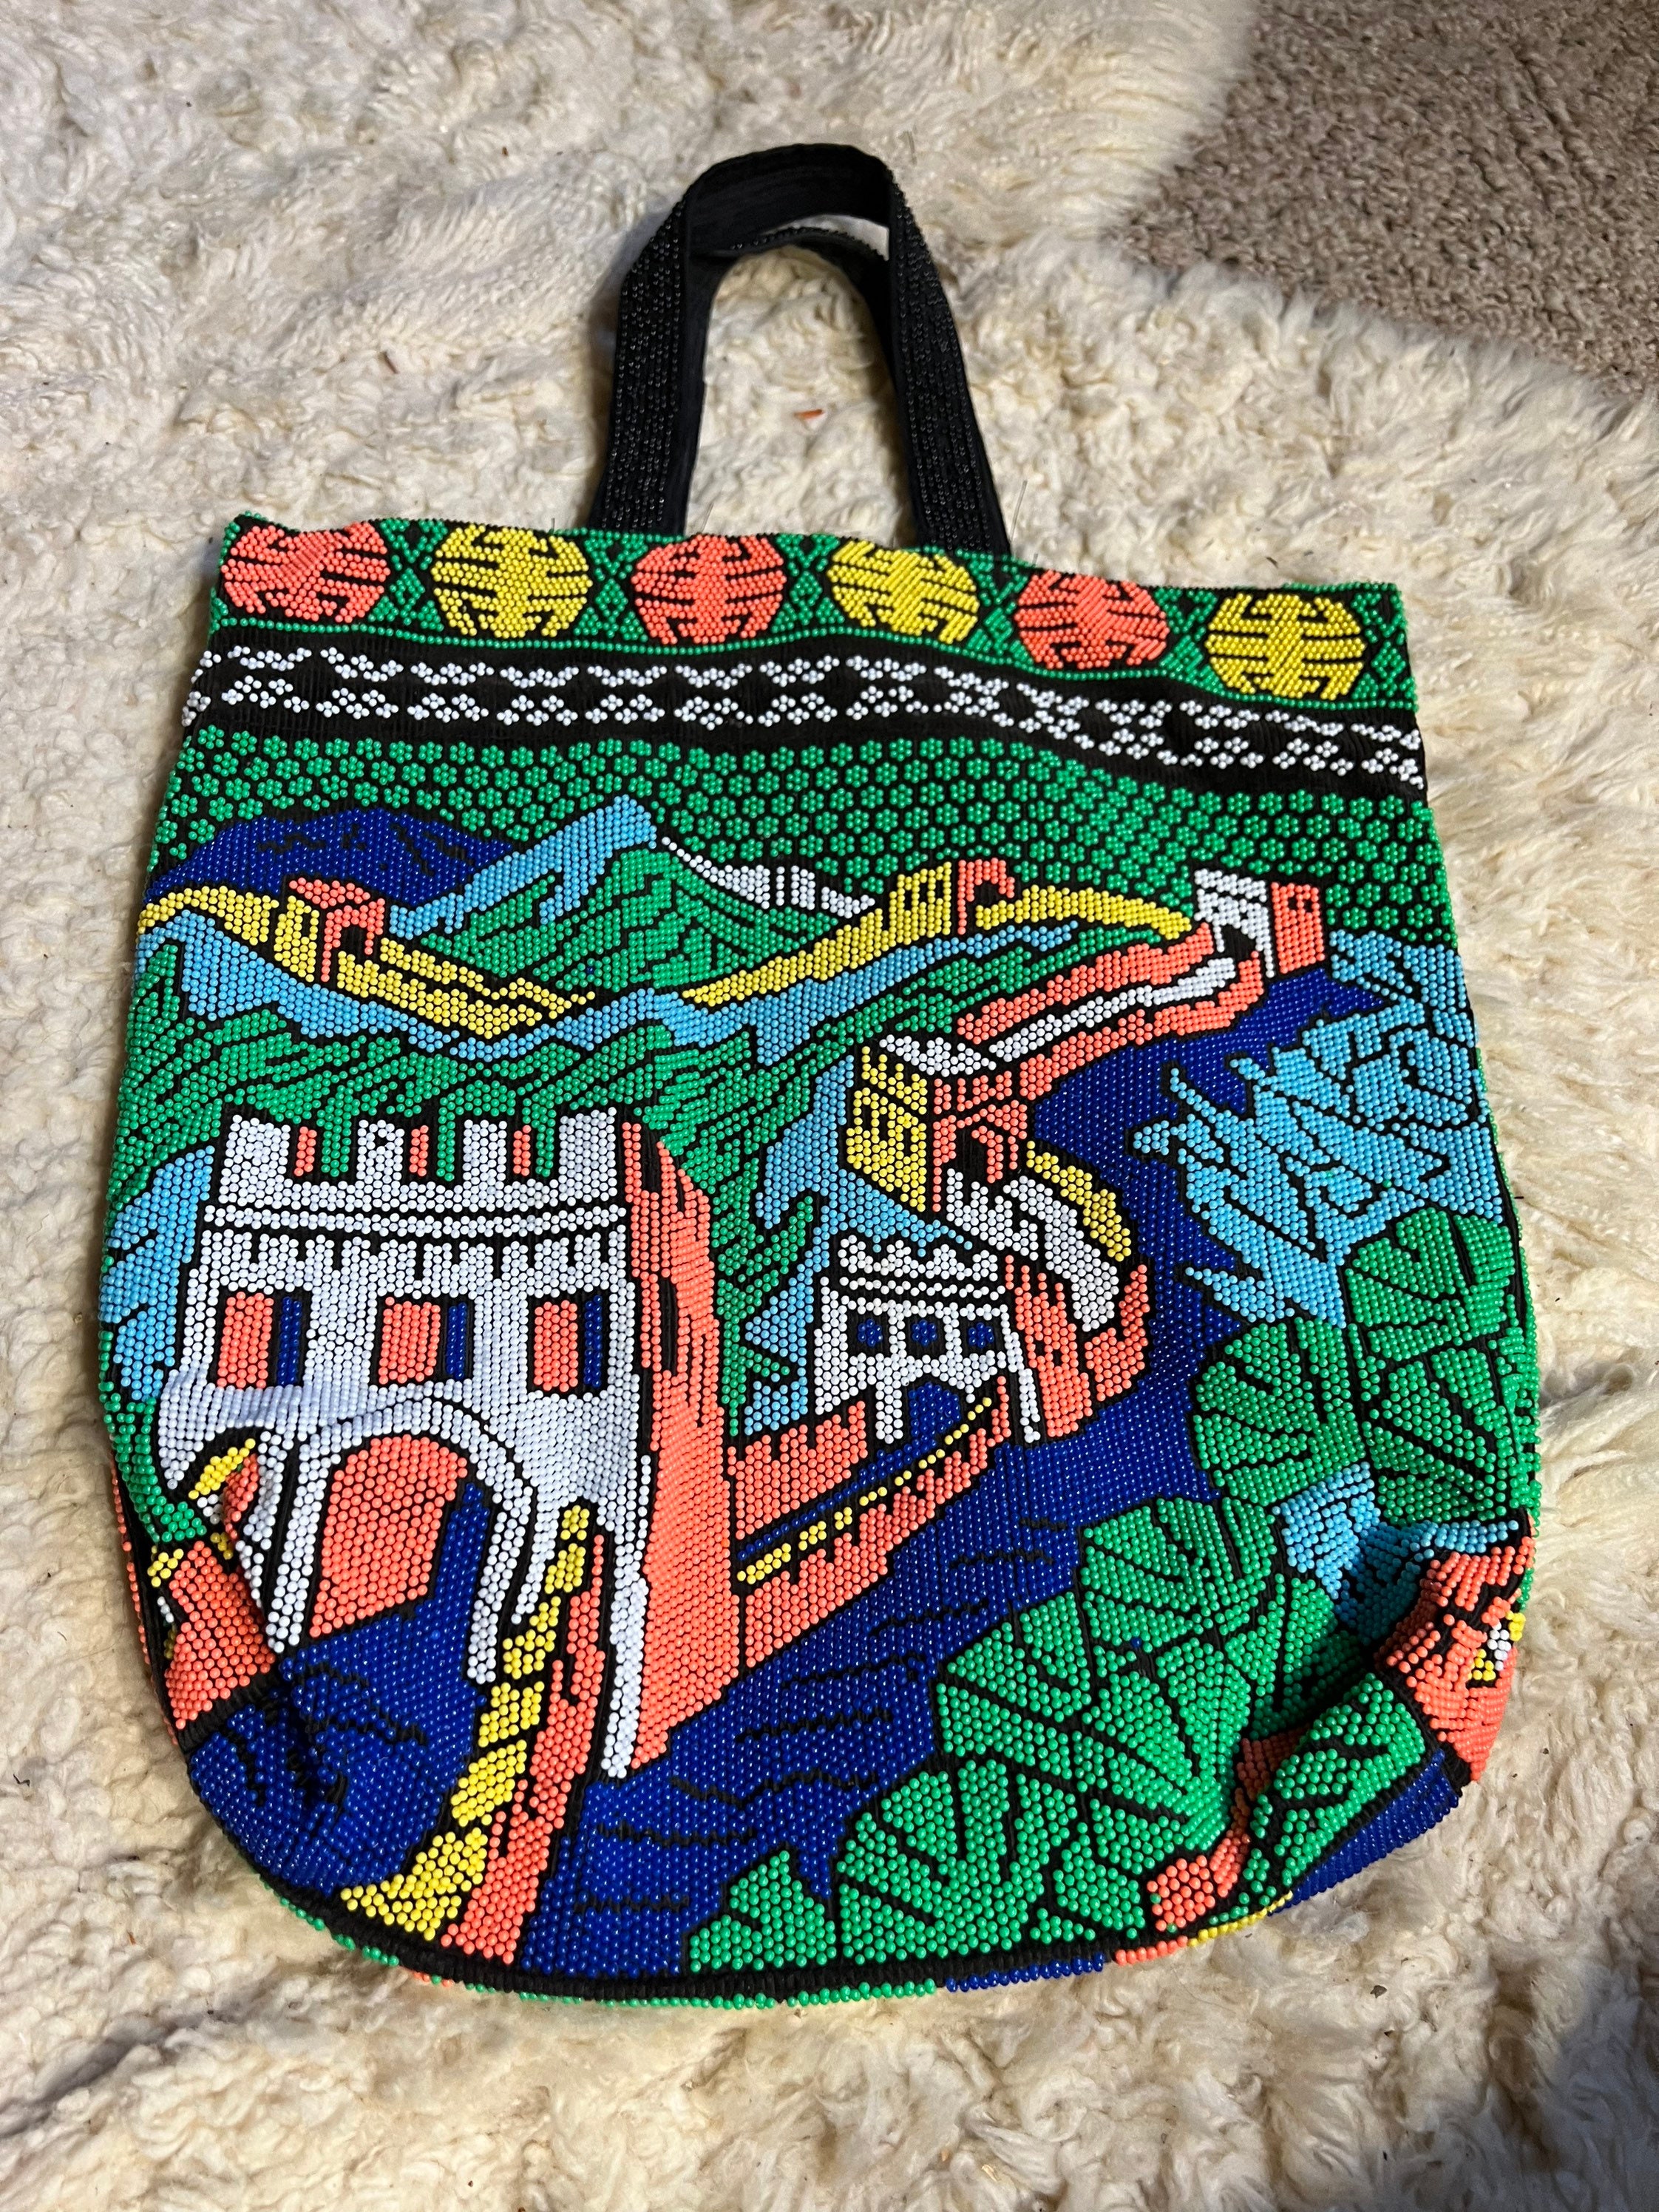 Beaded Vintage Handbag, Candy Dot Purse, scenic Colorful Market Bag